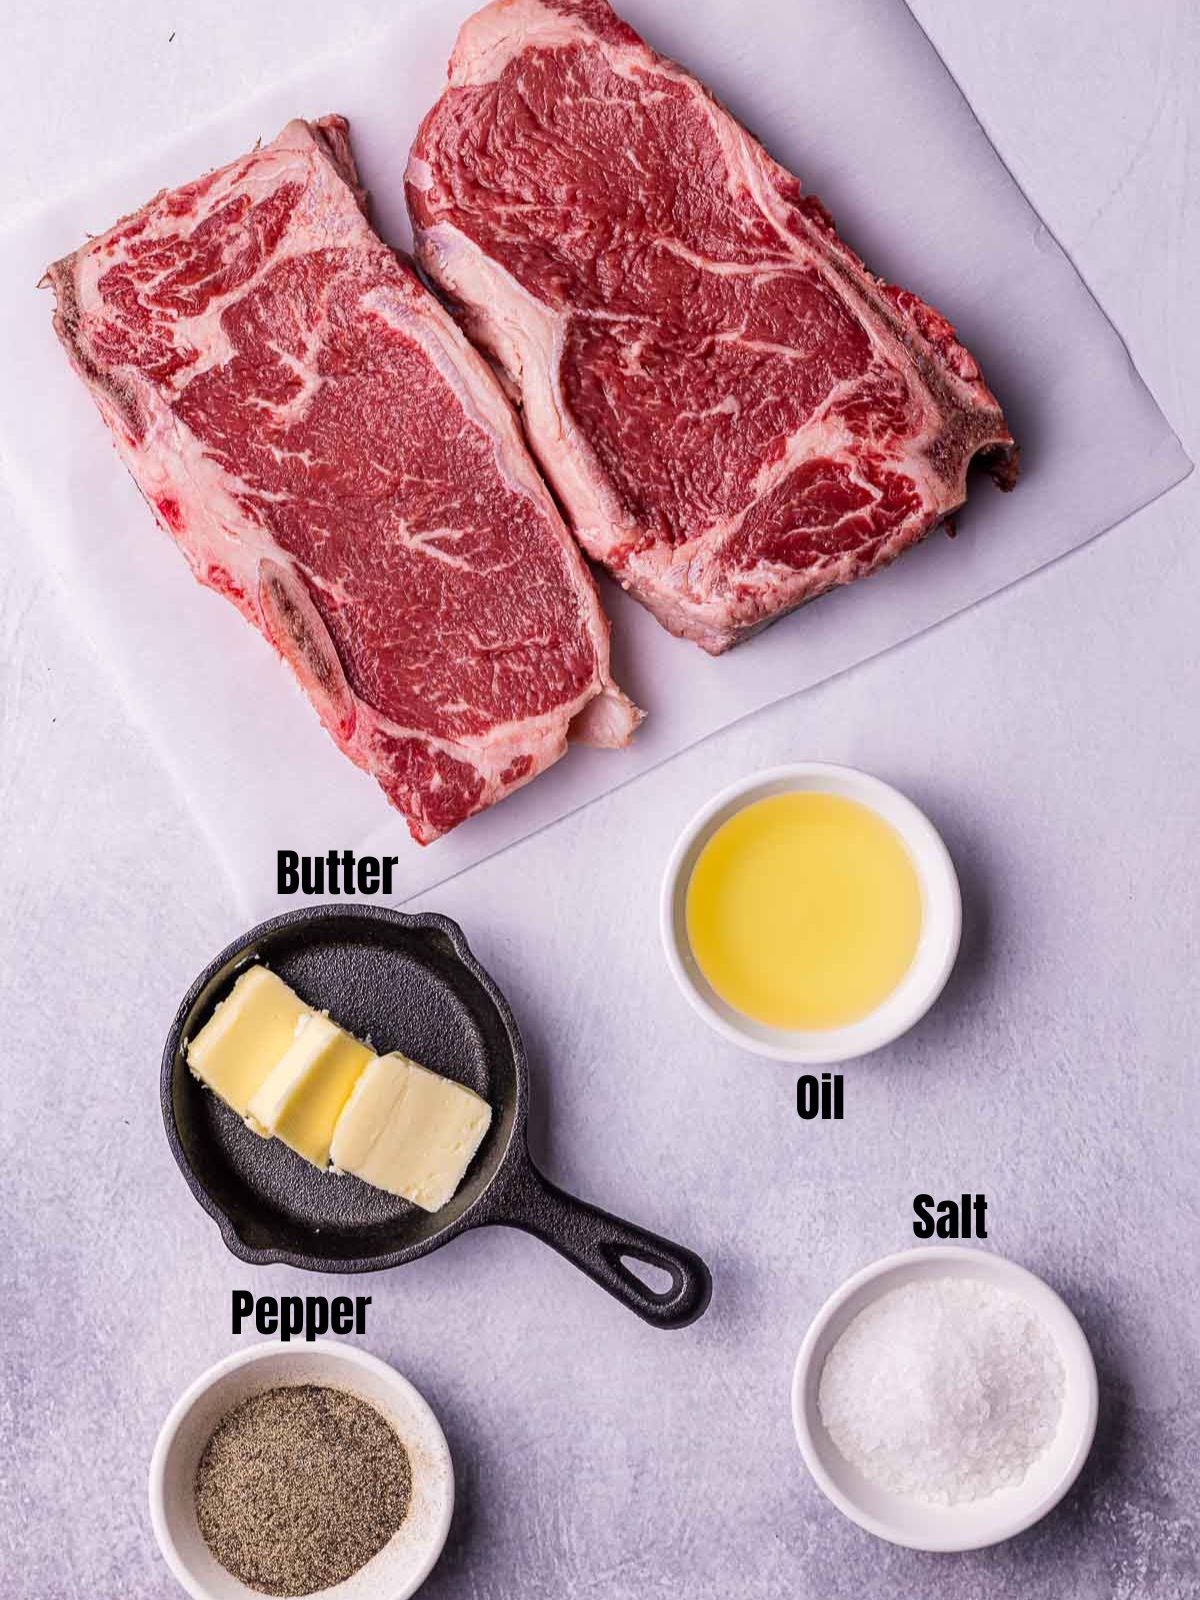 Sous Vide Steak Guide